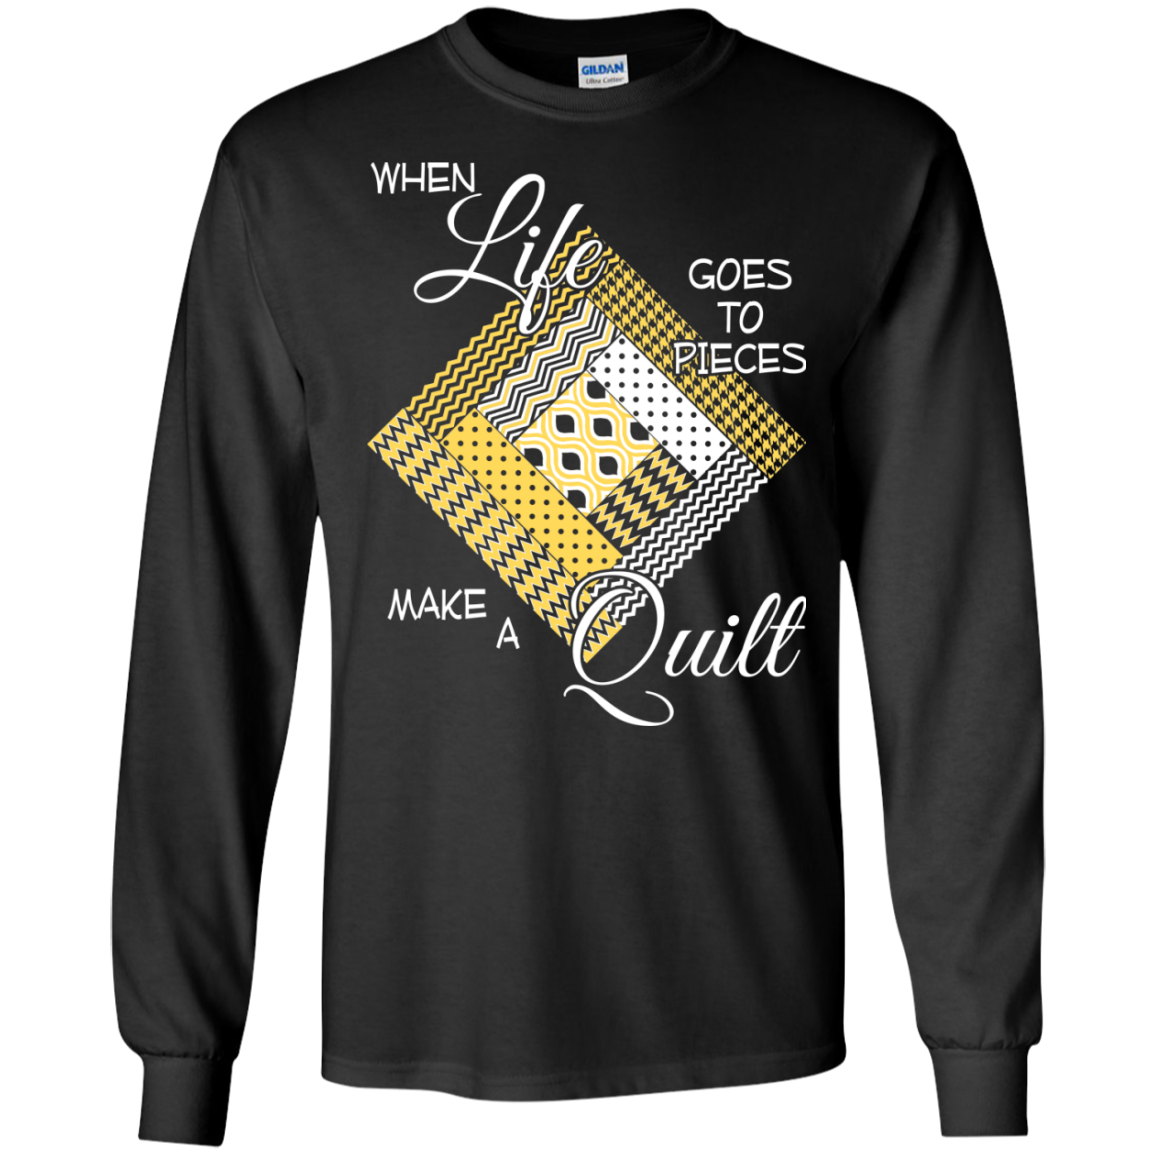 Make a Quilt (yellow) Long Sleeve Ultra Cotton T-Shirt - Crafter4Life - 2